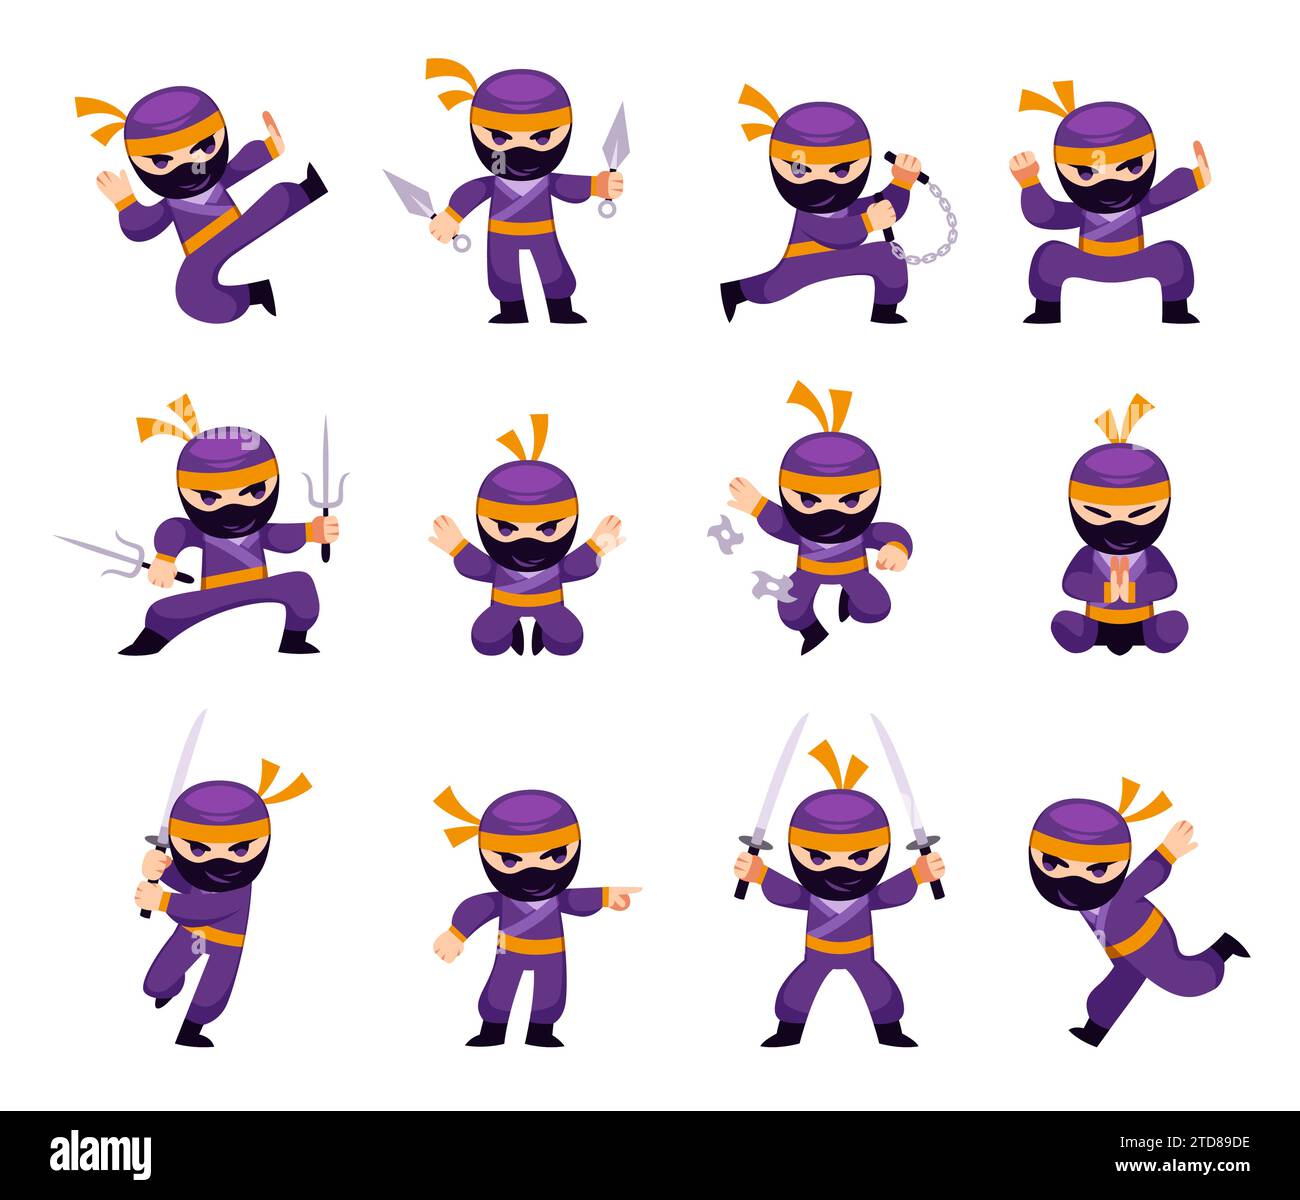 https://c8.alamy.com/comp/2TD89DE/cartoon-ninja-man-in-different-action-and-combat-poses-karate-japanese-warrior-character-in-mask-asian-assassin-with-weapon-nunchucks-and-shuriken-2TD89DE.jpg